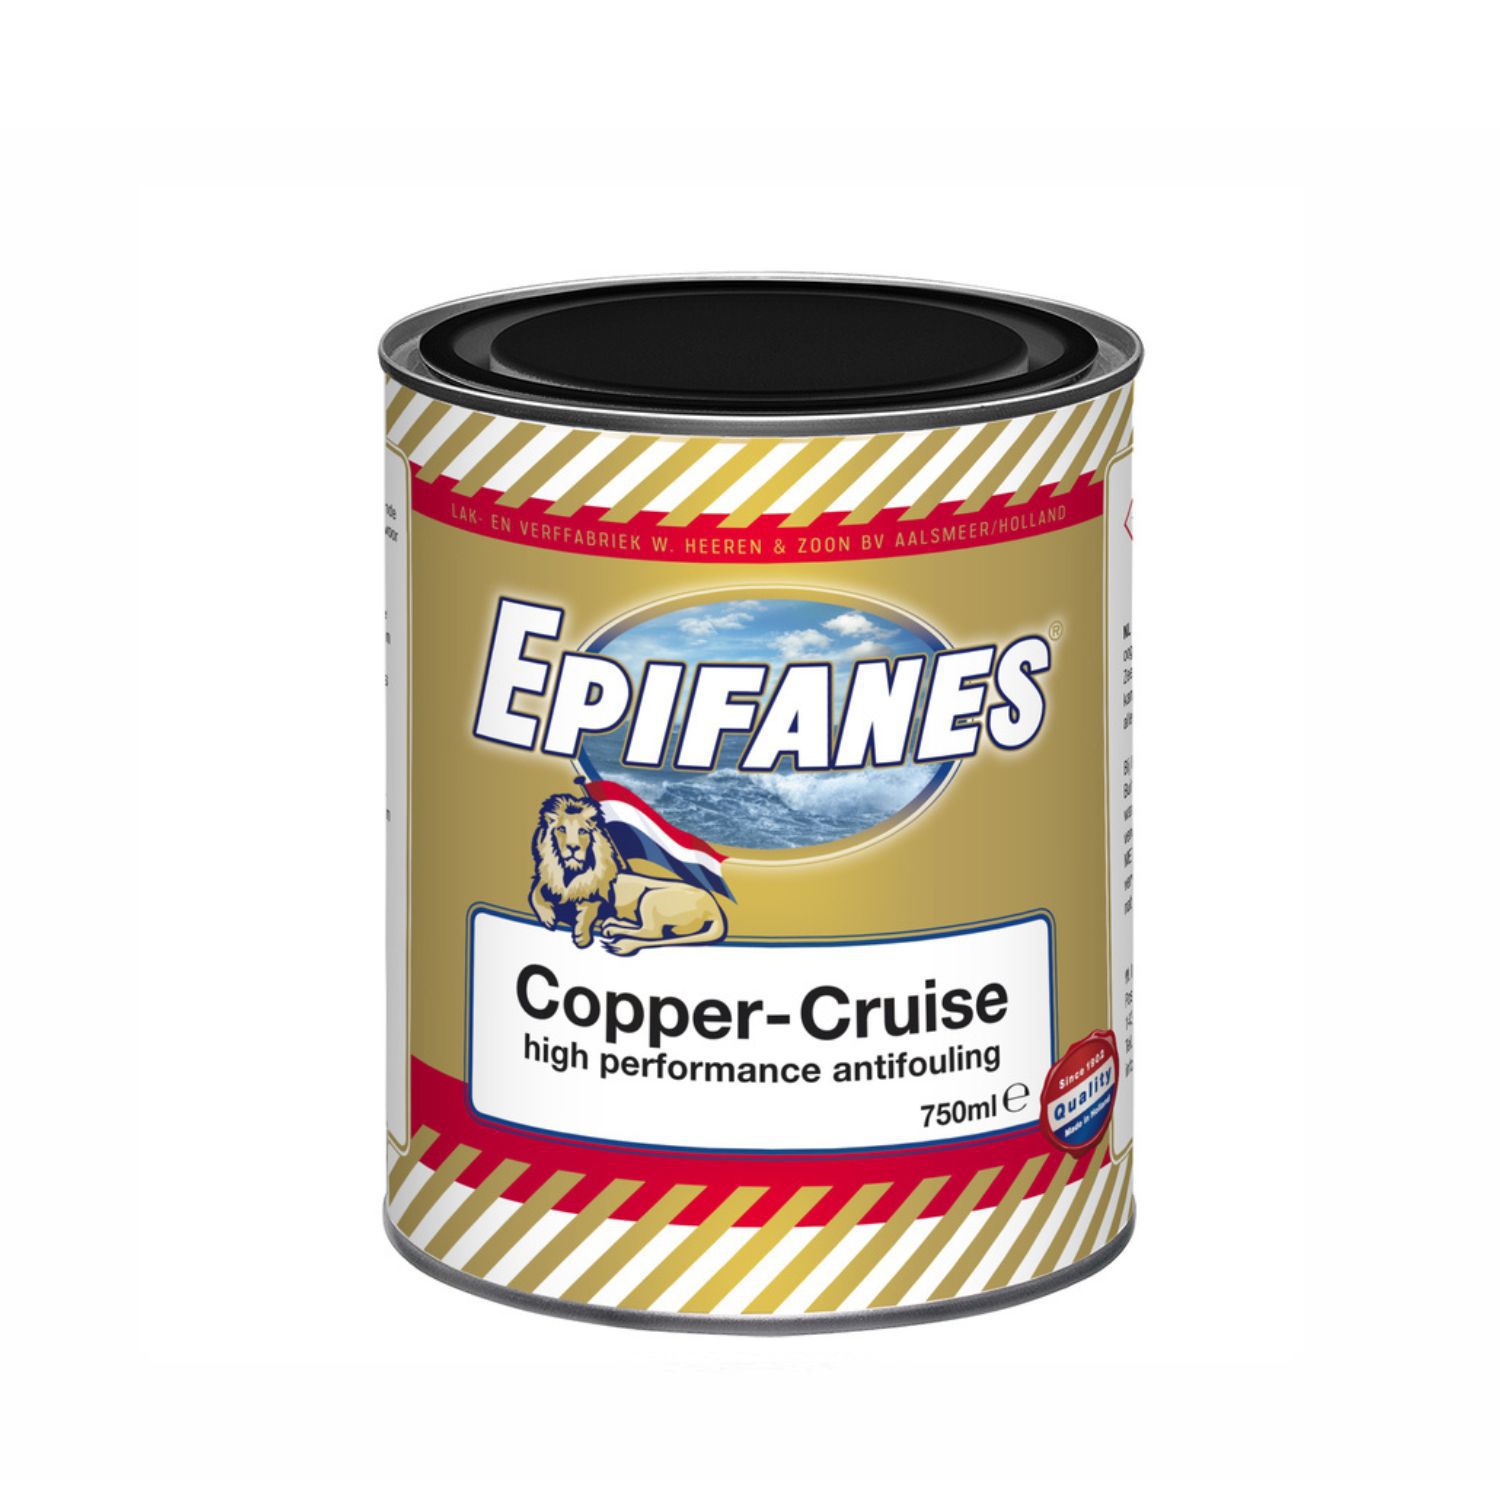 Epifanes antifouling copper cruise